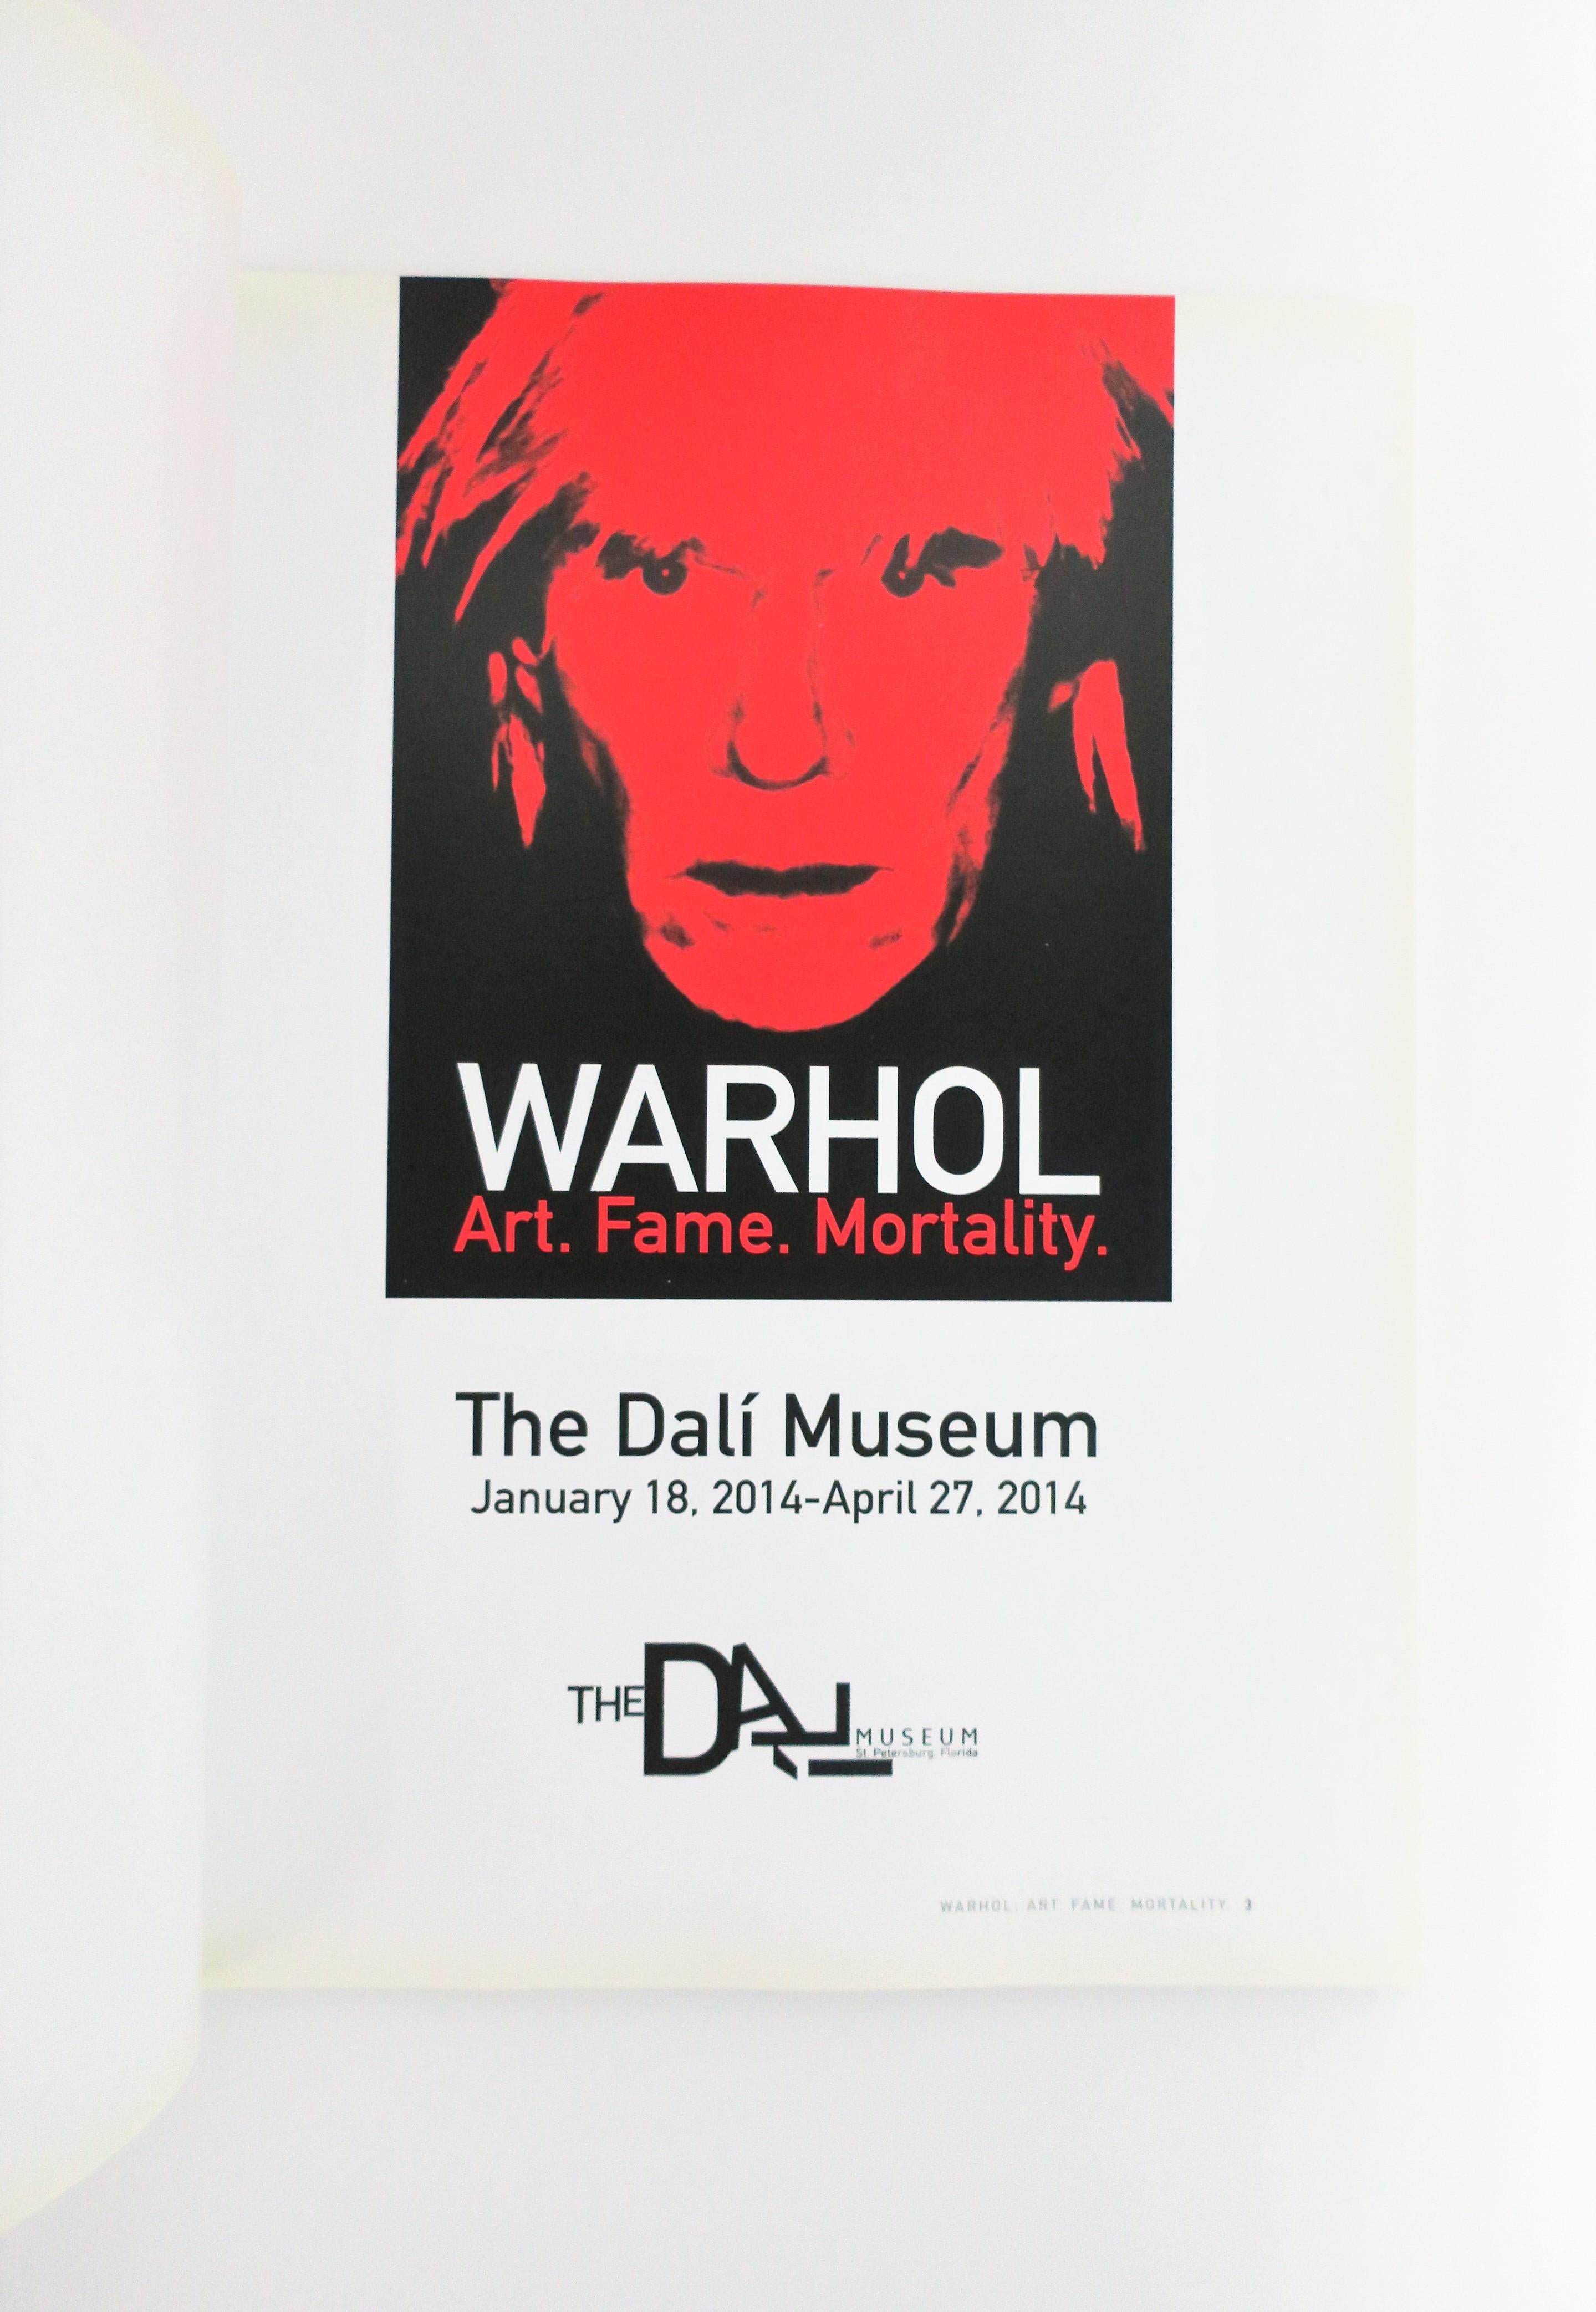 American Warhol Art, Fame, Mortality, Exhibition Book